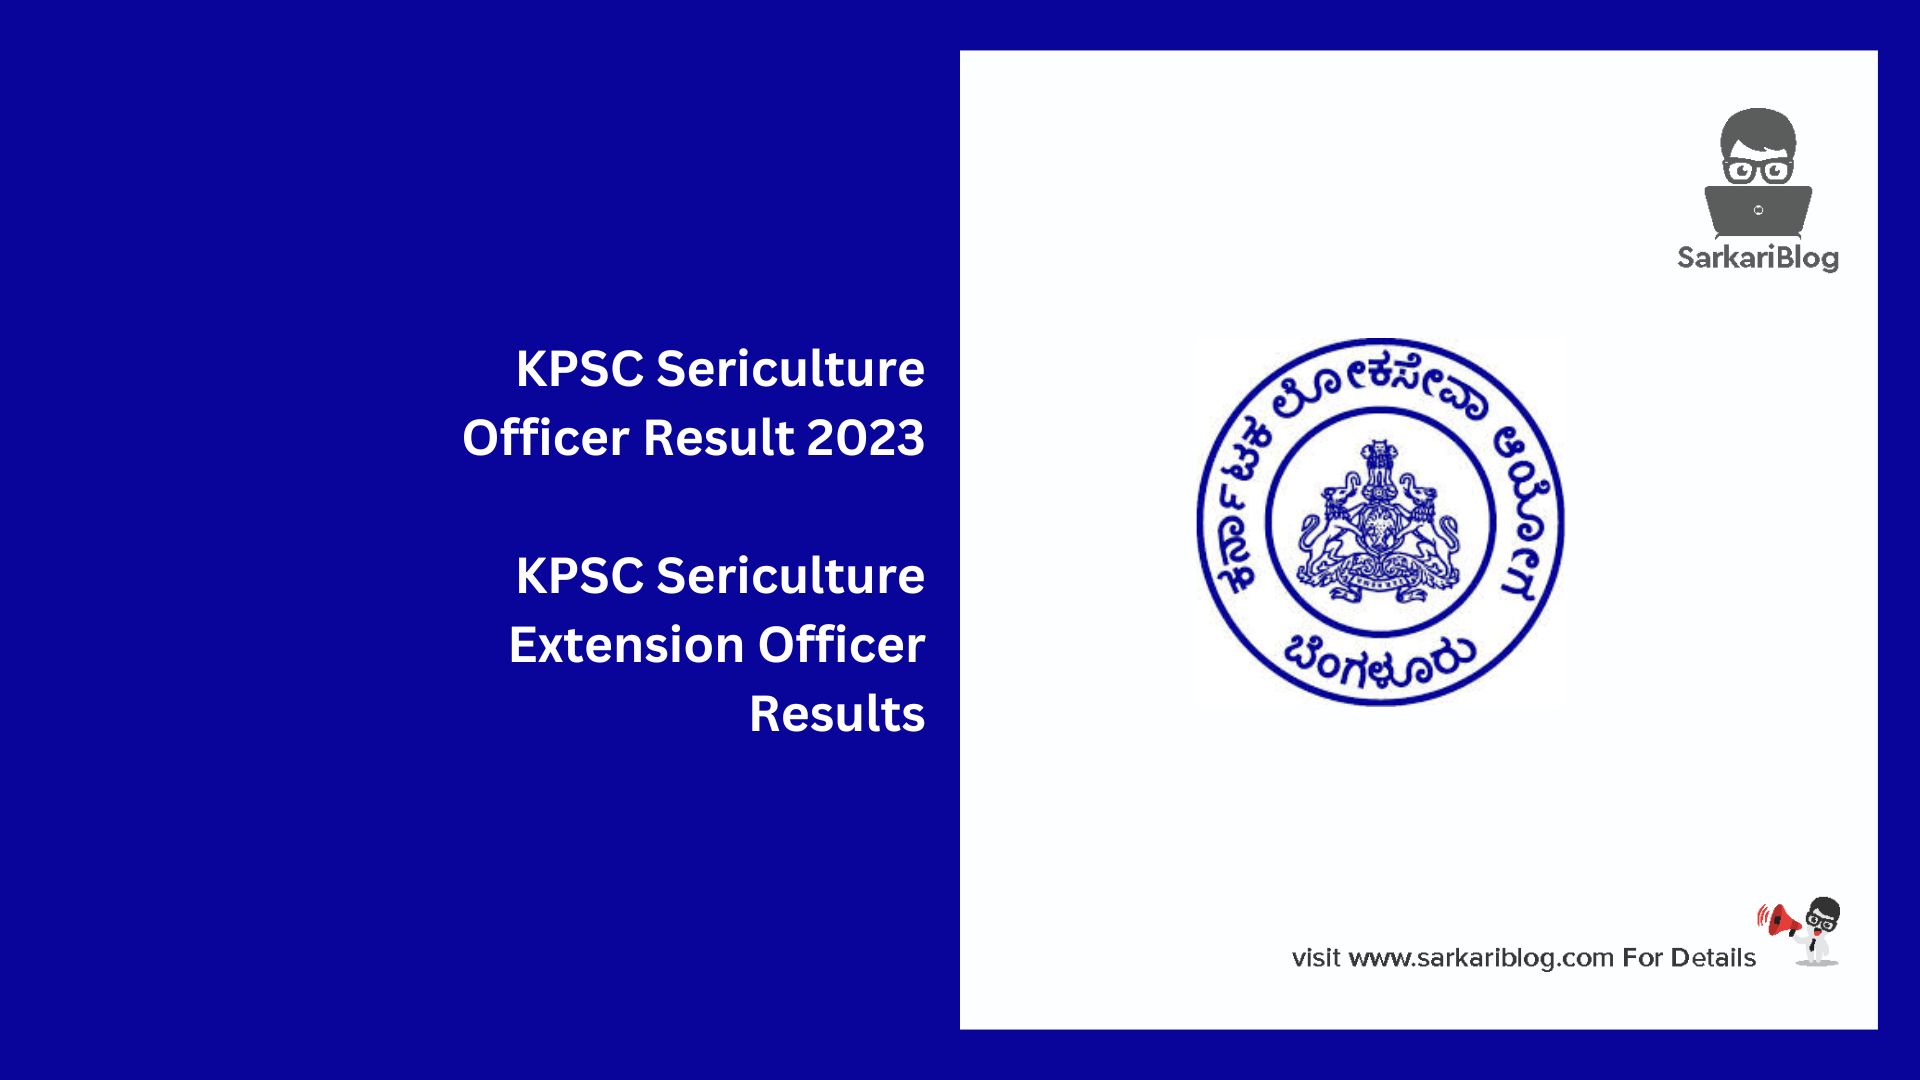 KPSC Sericulture Officer Result 2023